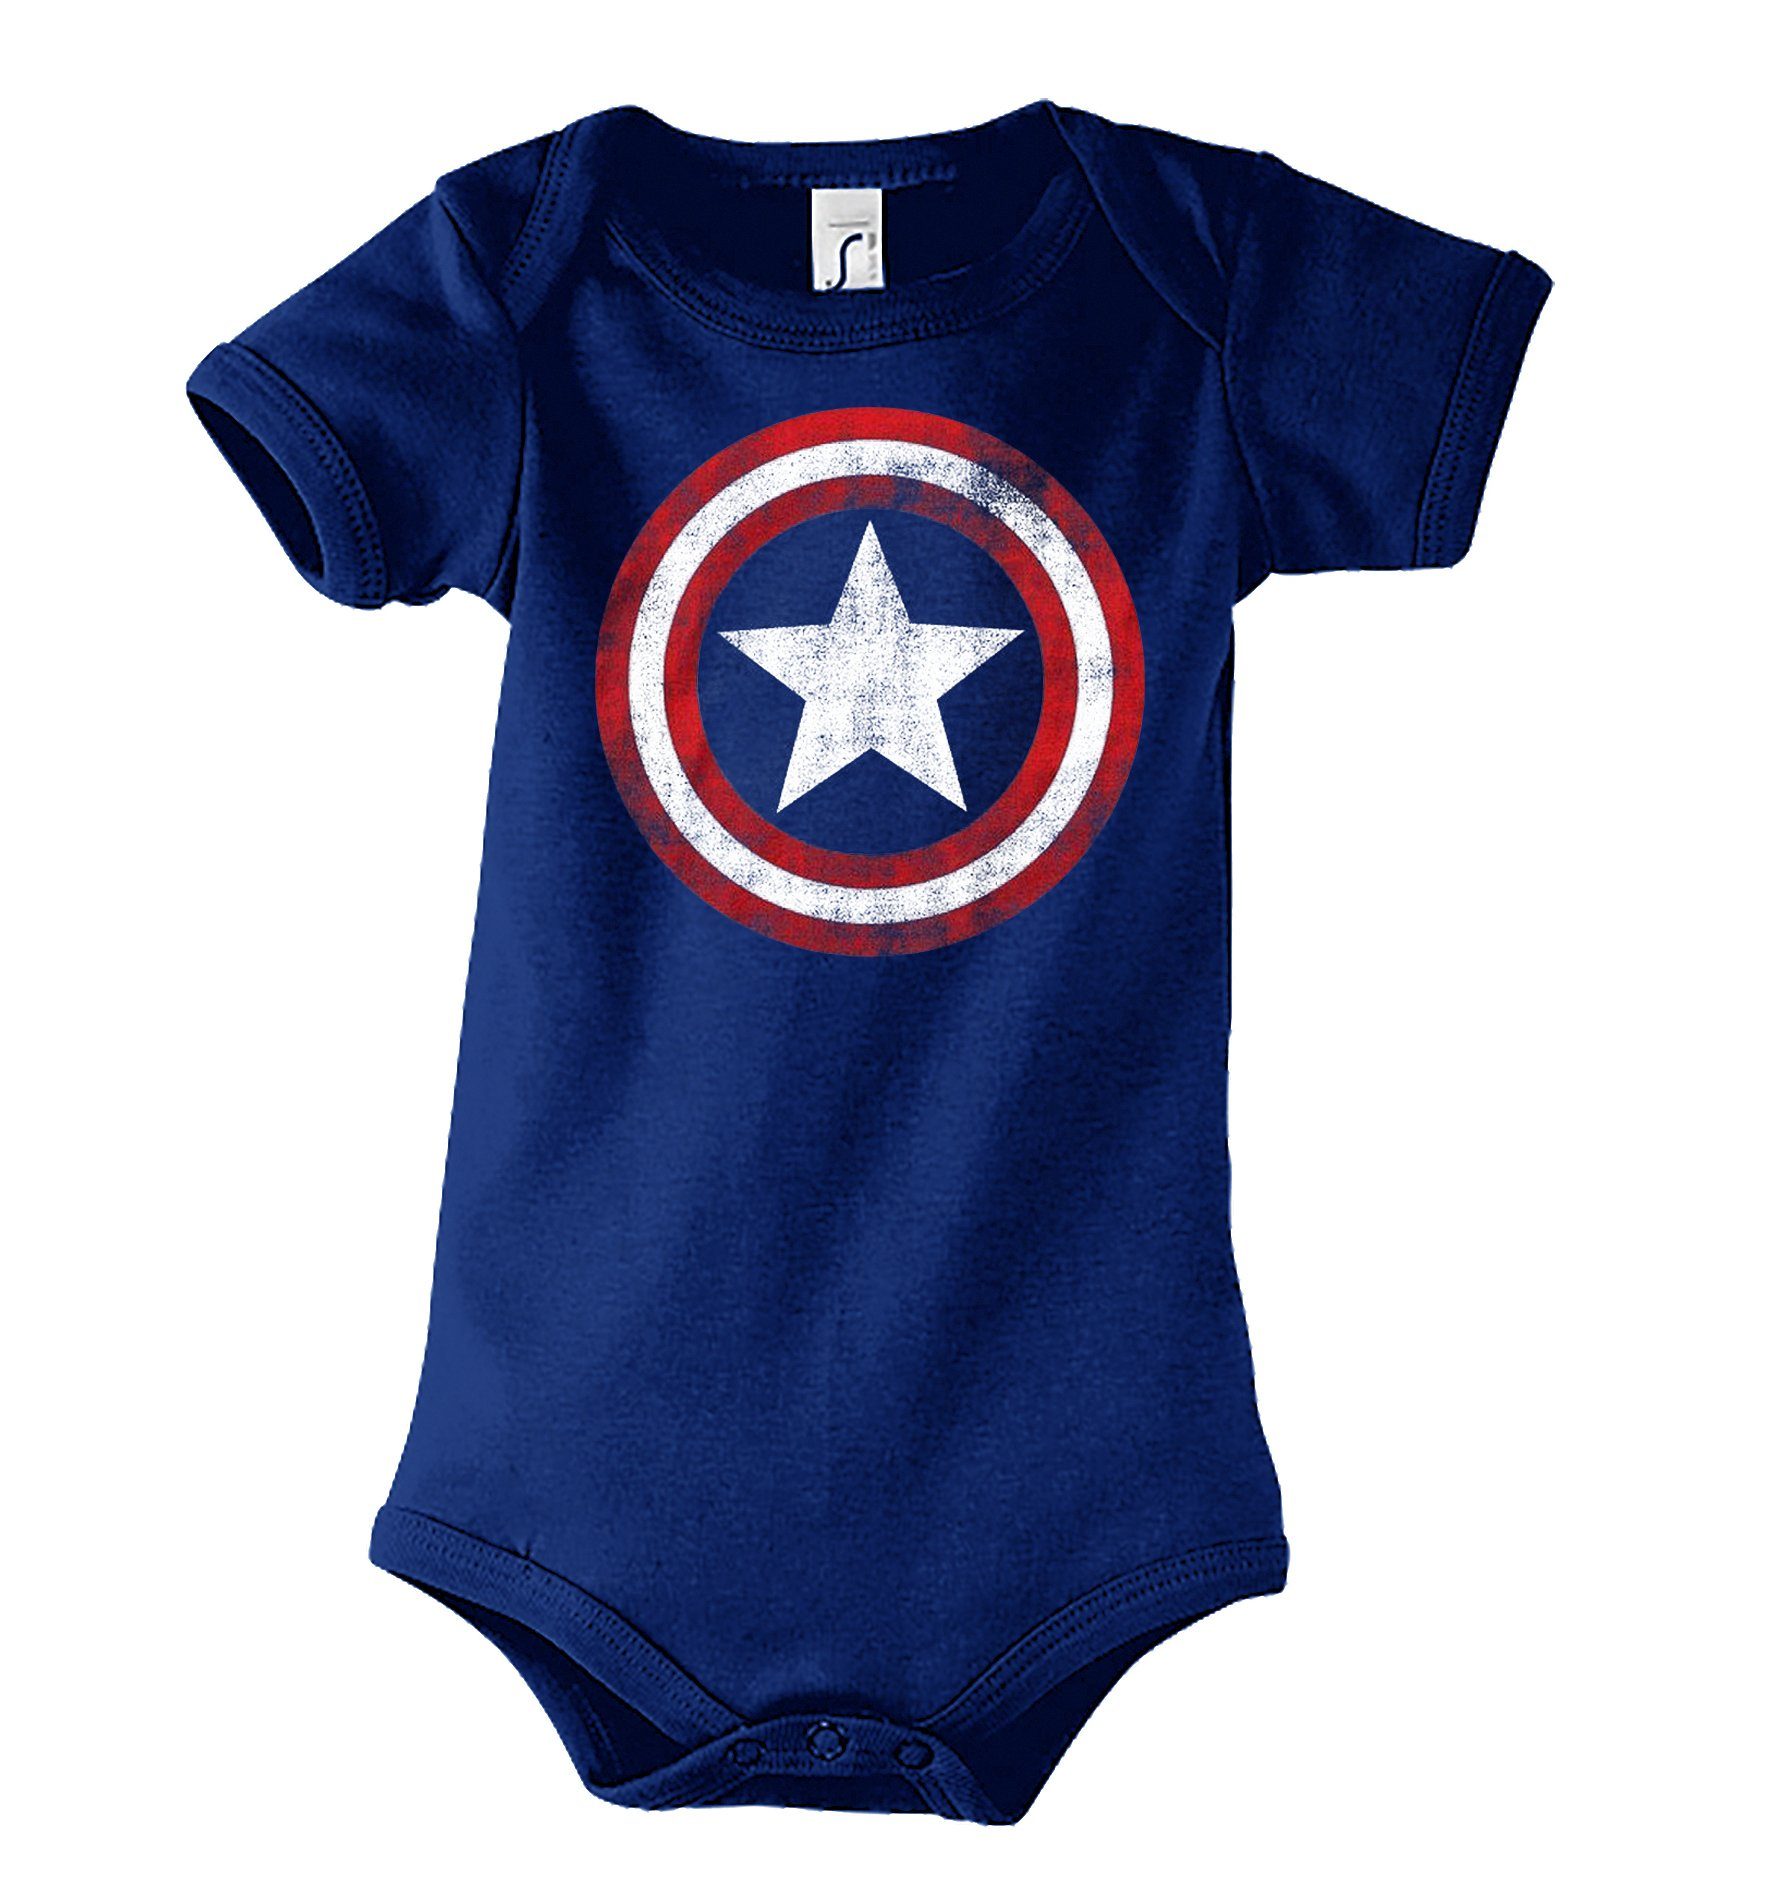 Youth Designz Kurzarmbody Baby Body Strampler Vintage Captain America mit niedlichem Frontprint Navy